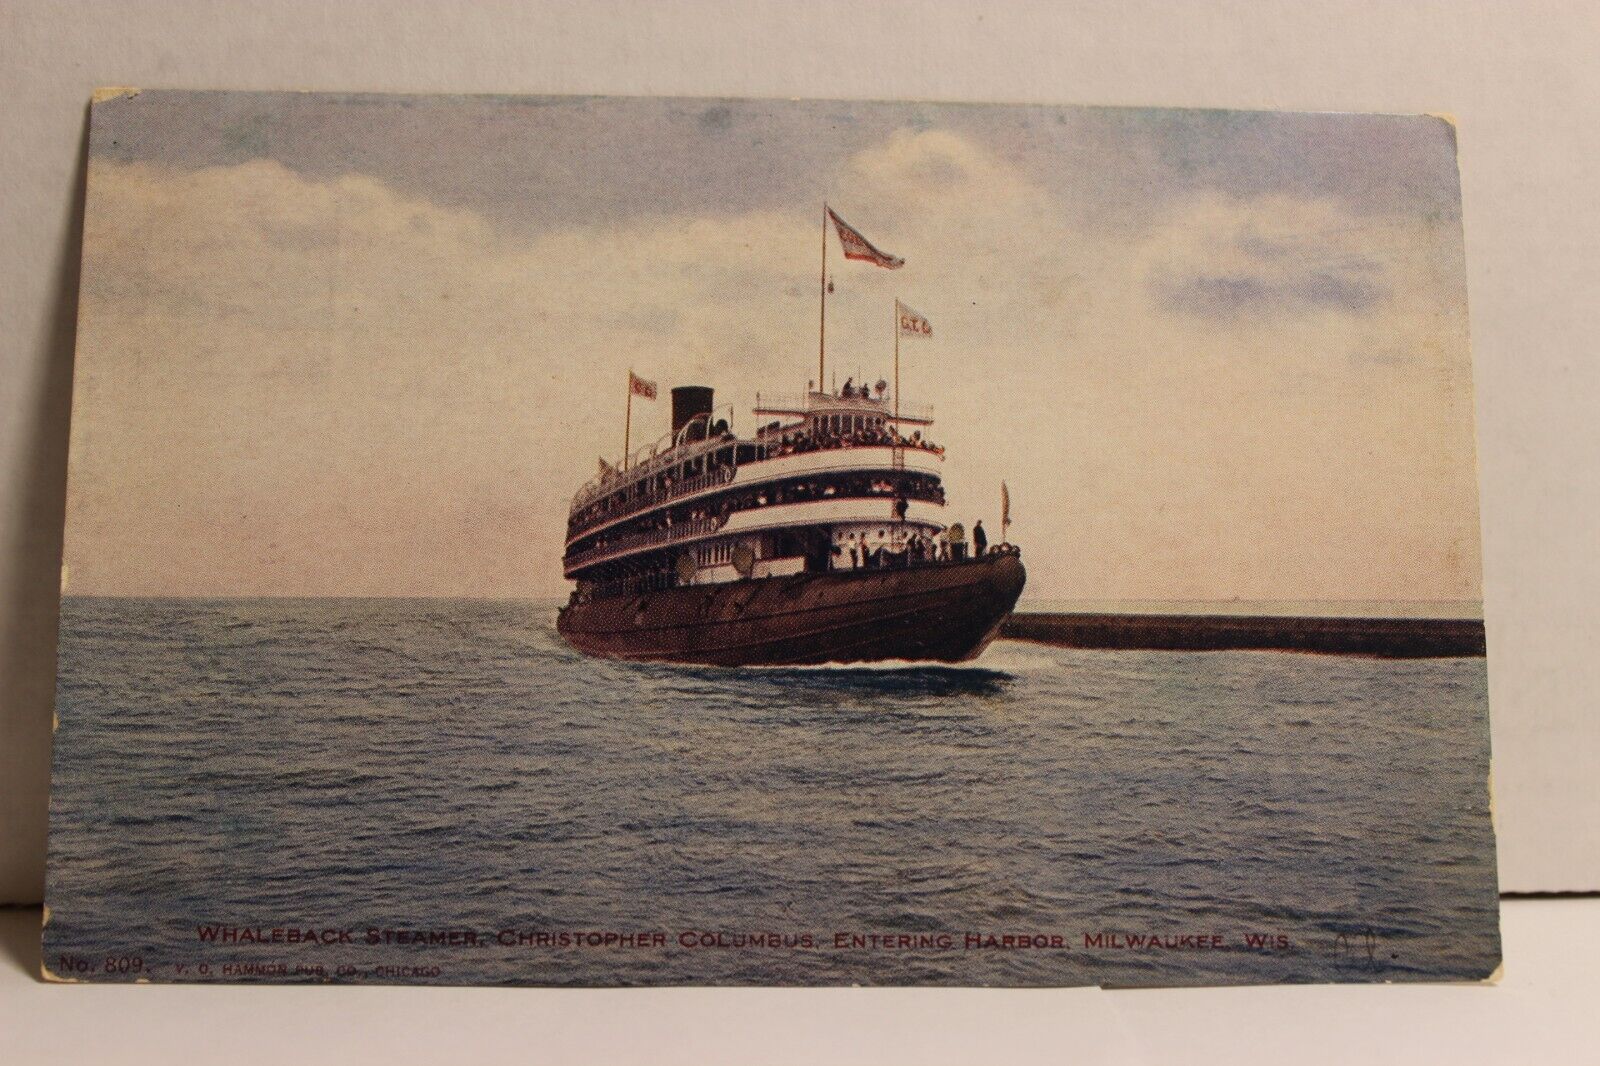 Whaleback Steamer Christopher Columbus Entering Harbor Milwaukee Wisconsin